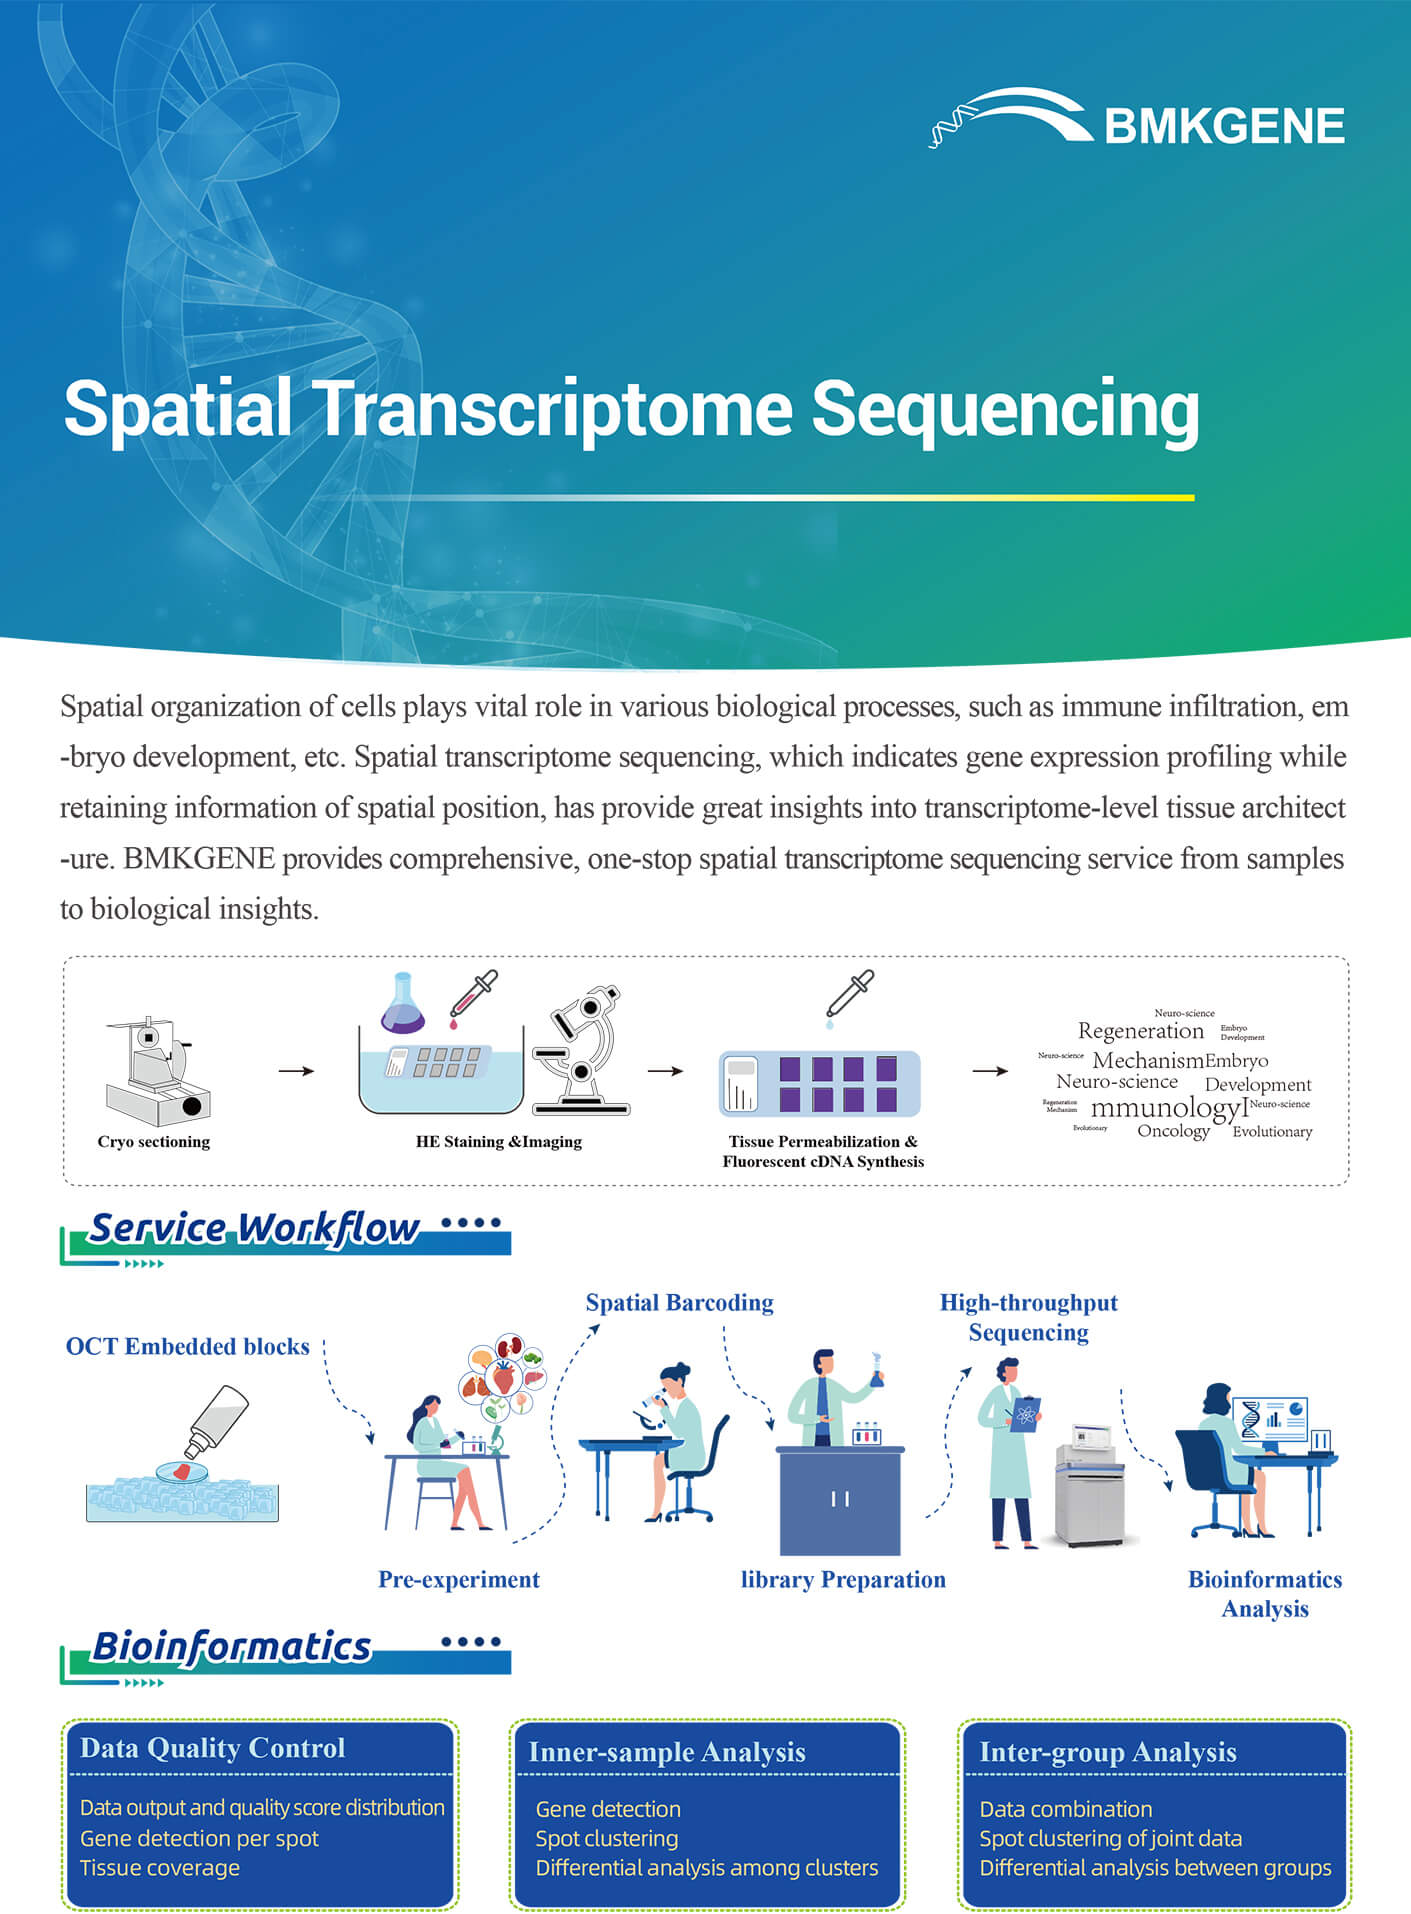 https://www.bmkgene.com/uploads/Spatial-Transcriptome-Sequencing-10X-BMKGENE-2311.pdf